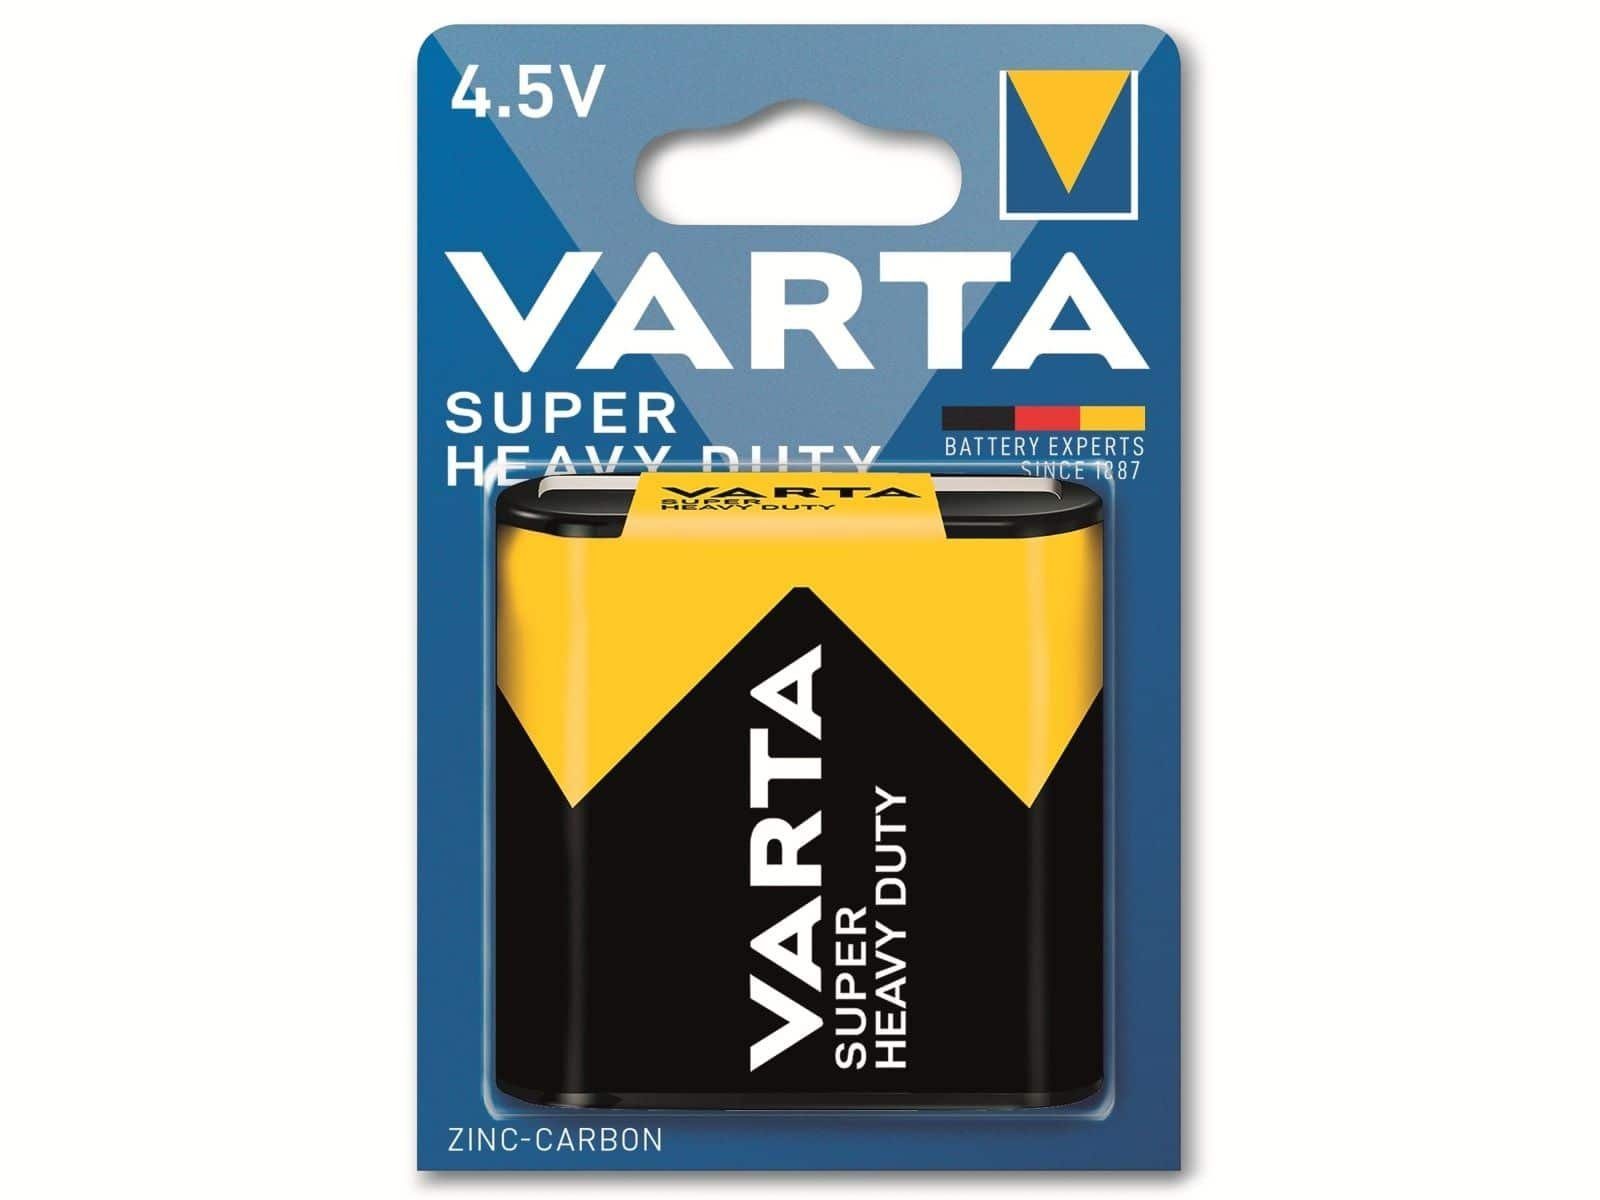 VARTA VARTA Batterie Zink-Kohle, 3R12, 4.5V, Superlife Batterie